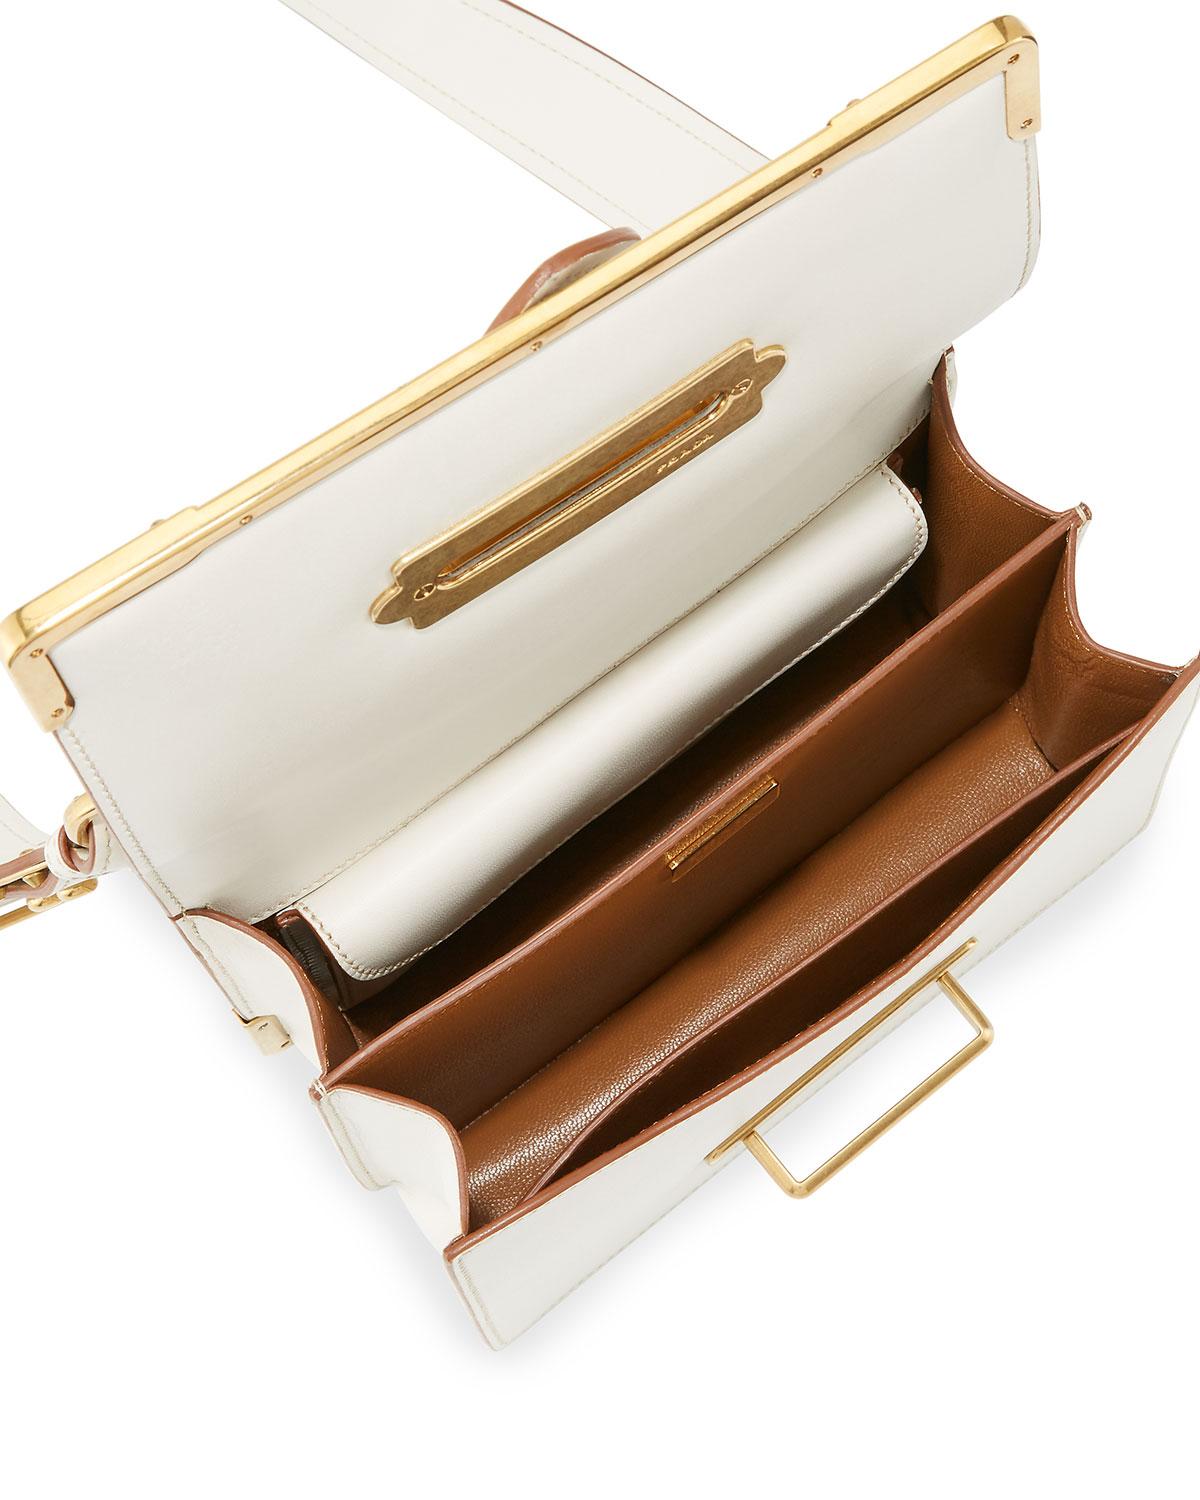 Prada Leather Laser-cut Cahier Shoulder Bag in White - Lyst